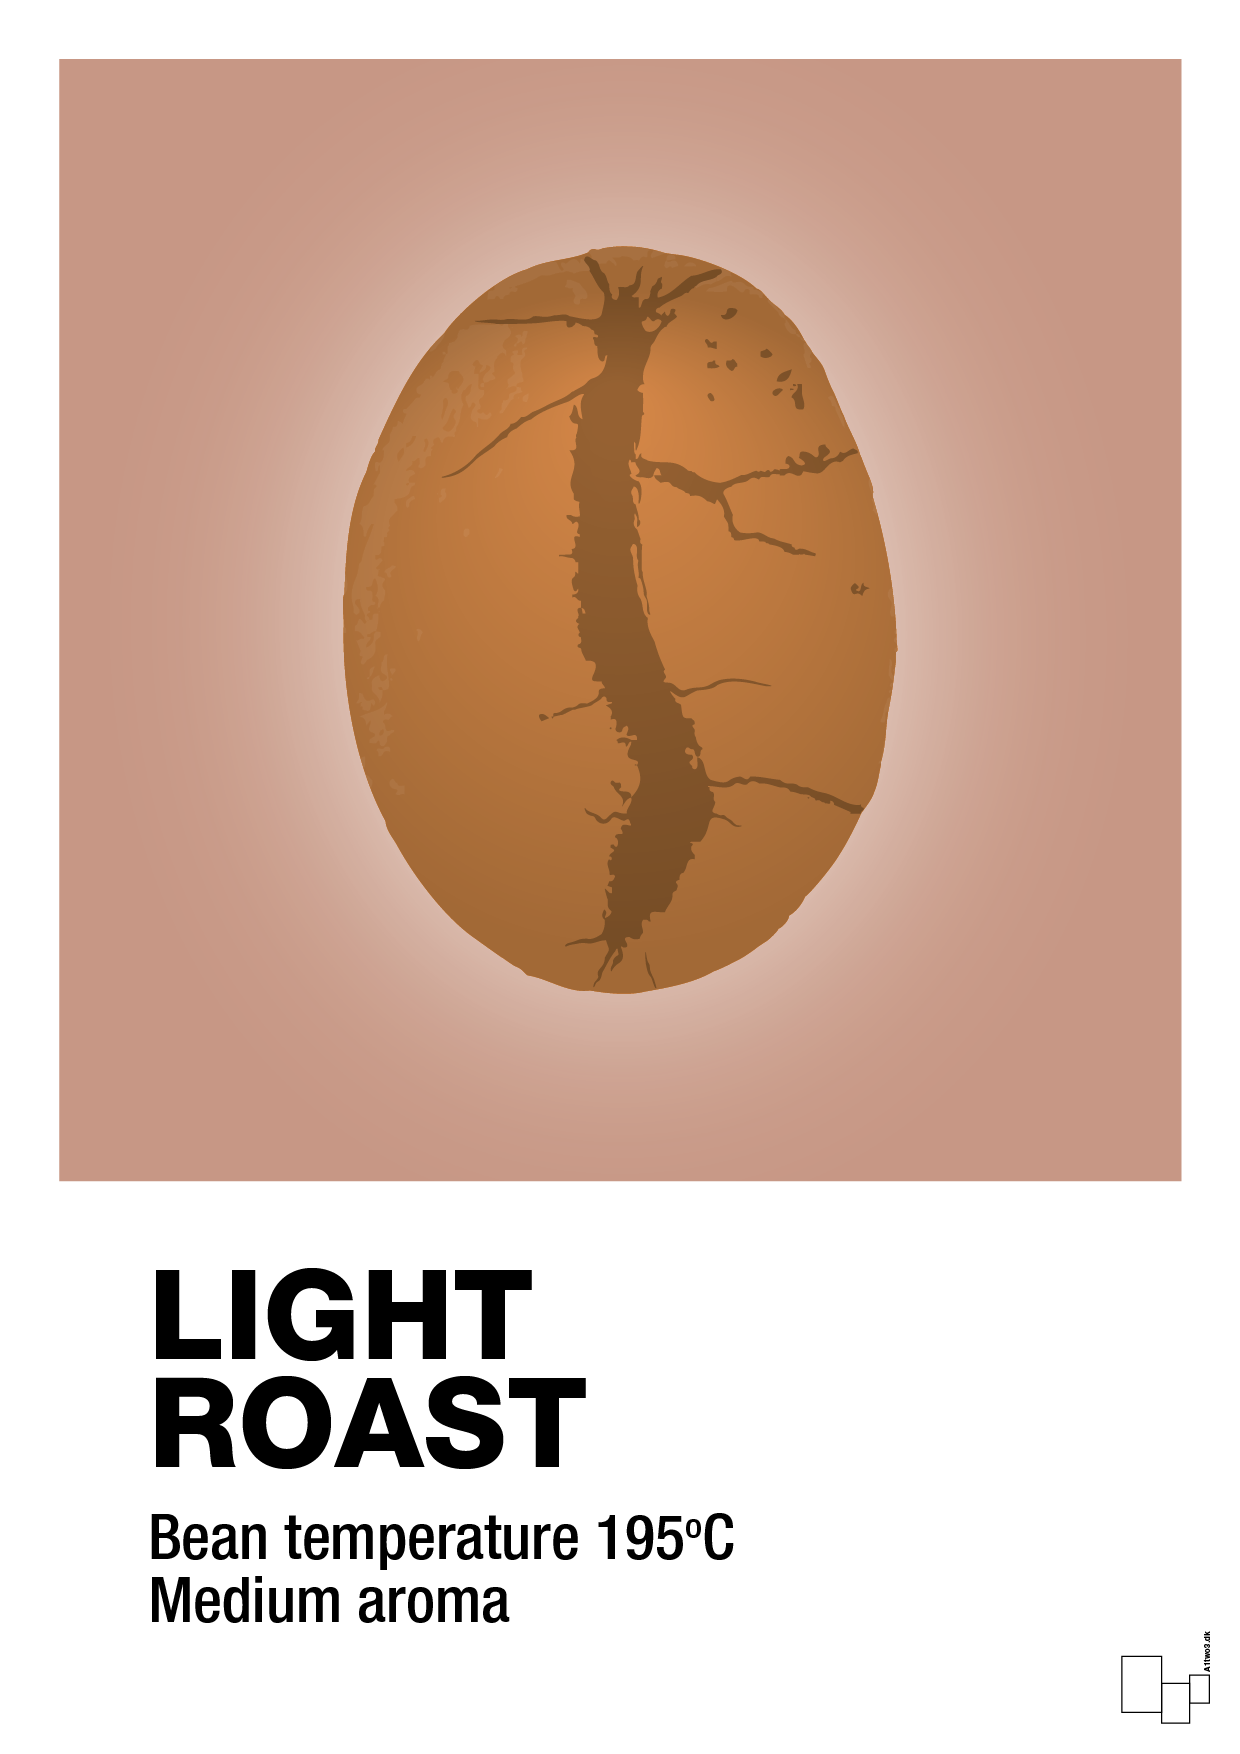 light roast - Plakat med Mad & Drikke i Powder